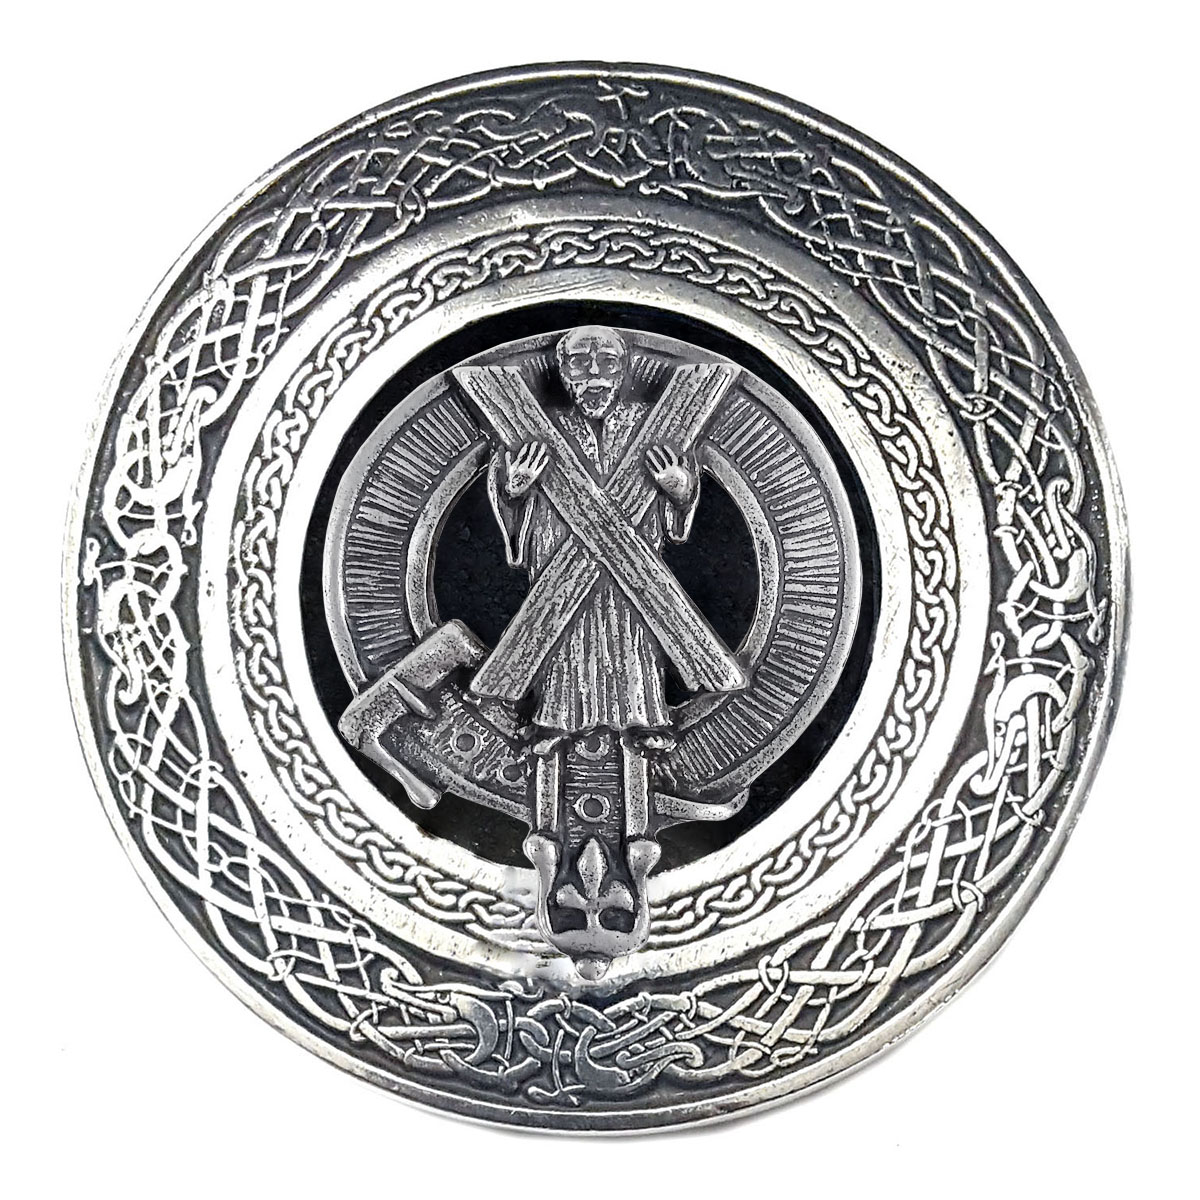 Saint Andrews Scottish Clan Crest Pewter Badge or Kilt Pin 